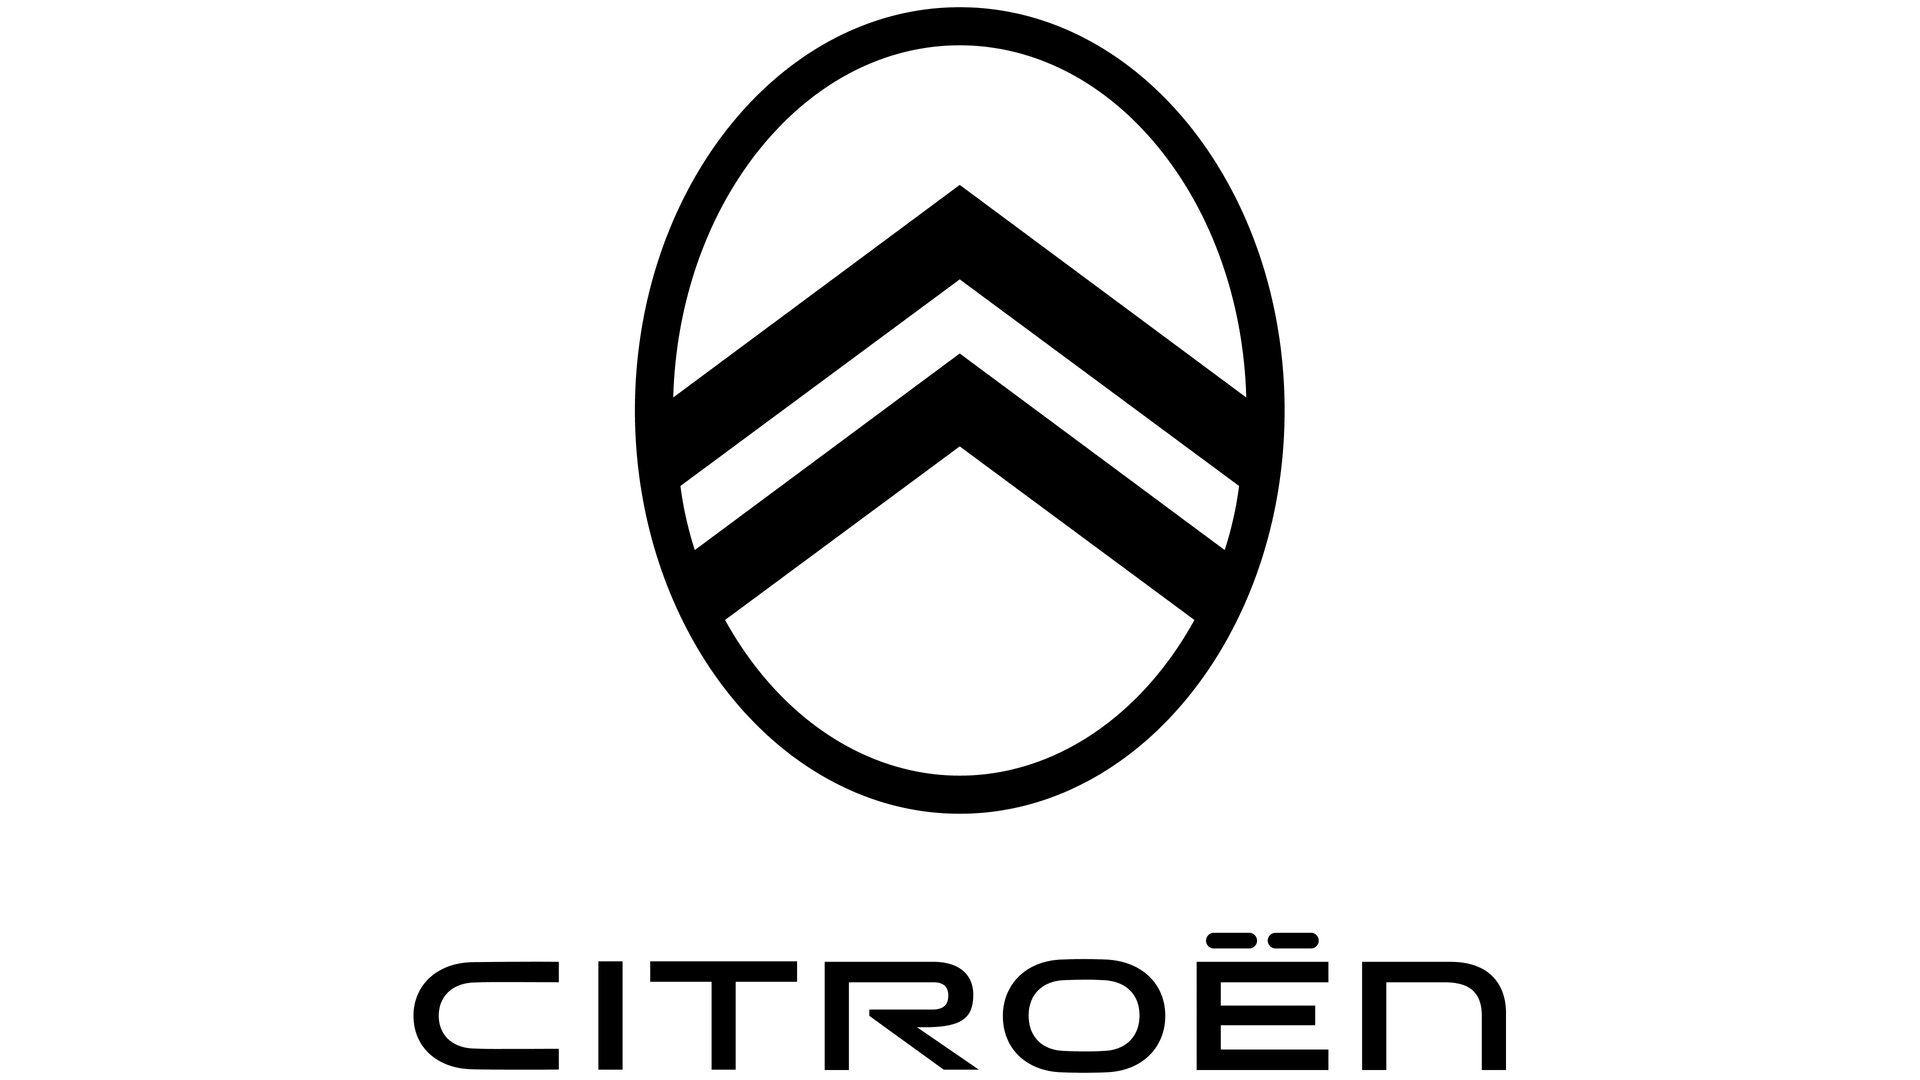 CITROEN logo. Current weekly ad